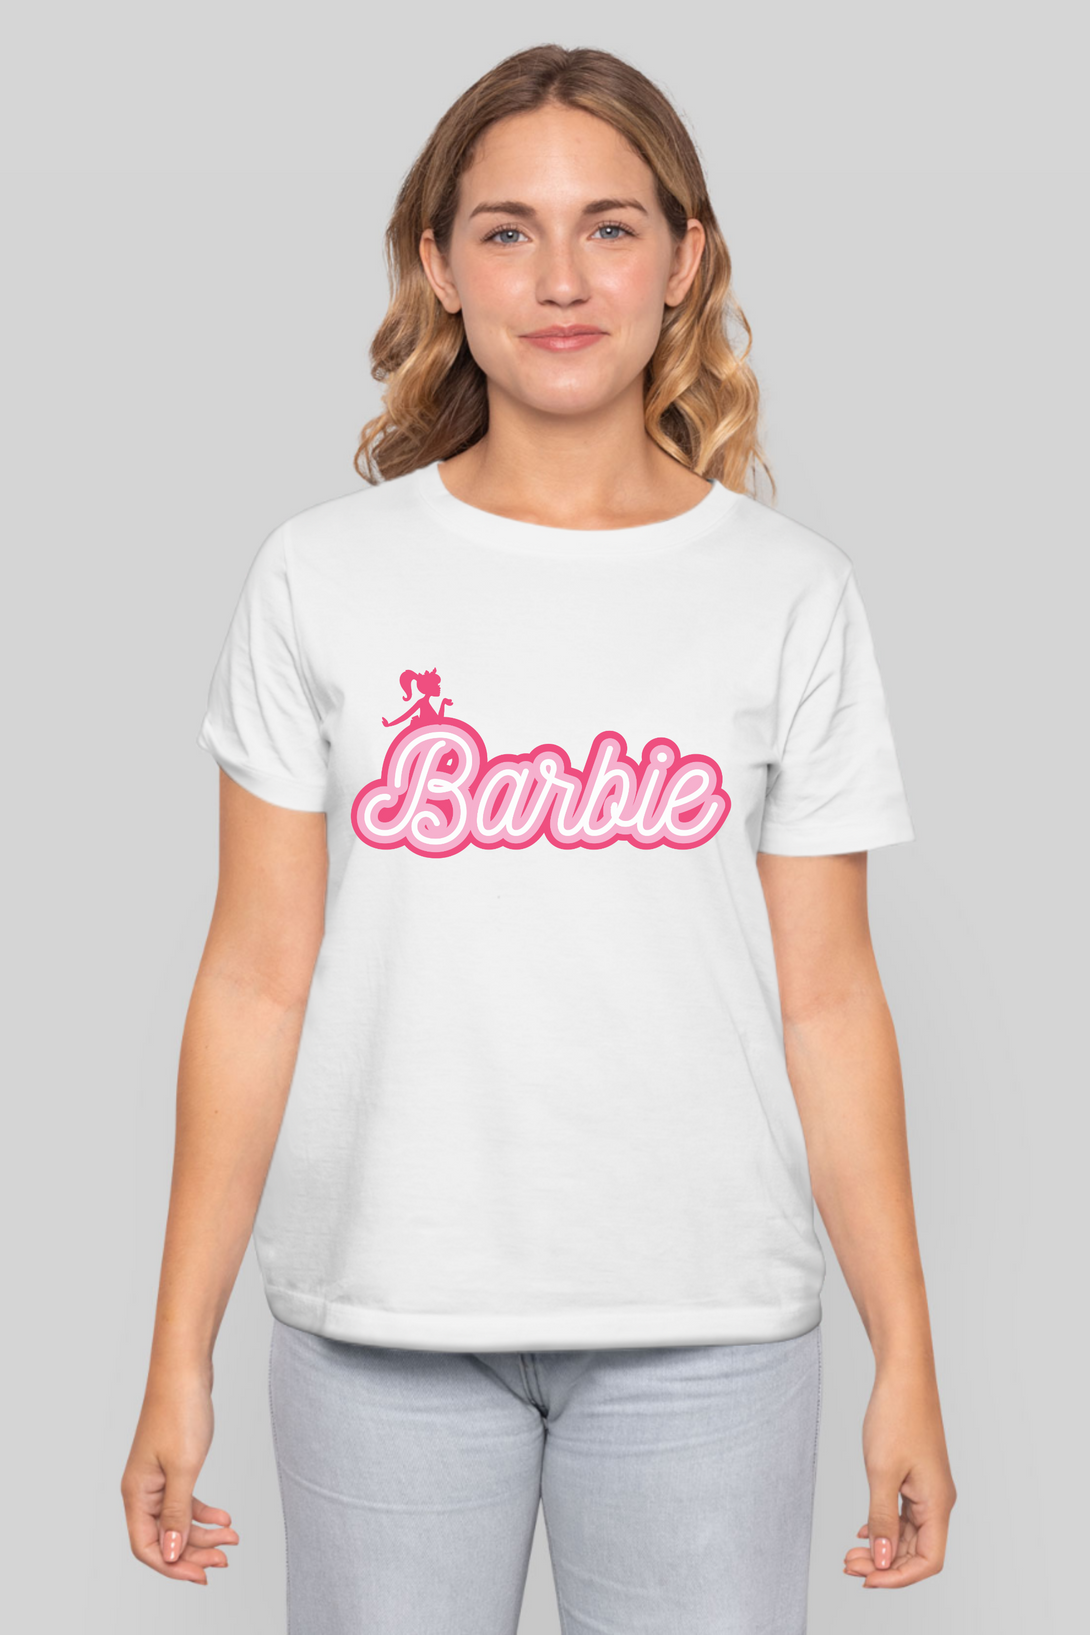 Barbie Printed T-Shirt For Women - WowWaves - 7